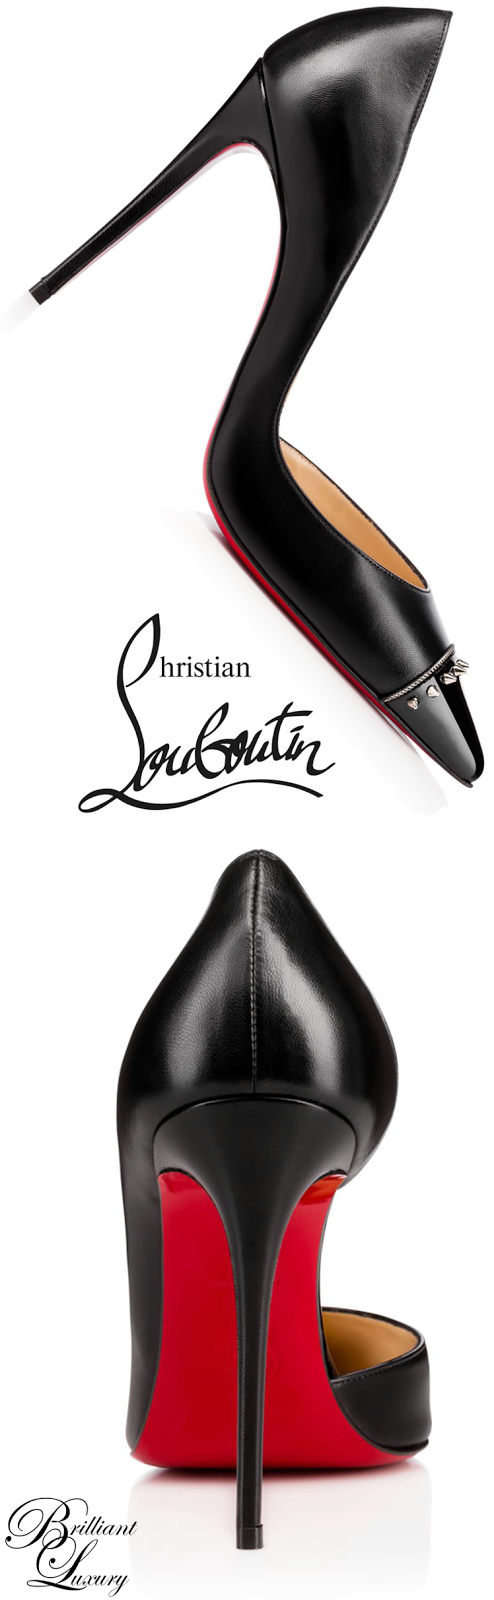 Brilliant Luxury: ♦Christian Louboutin 'Black Edition' 2015